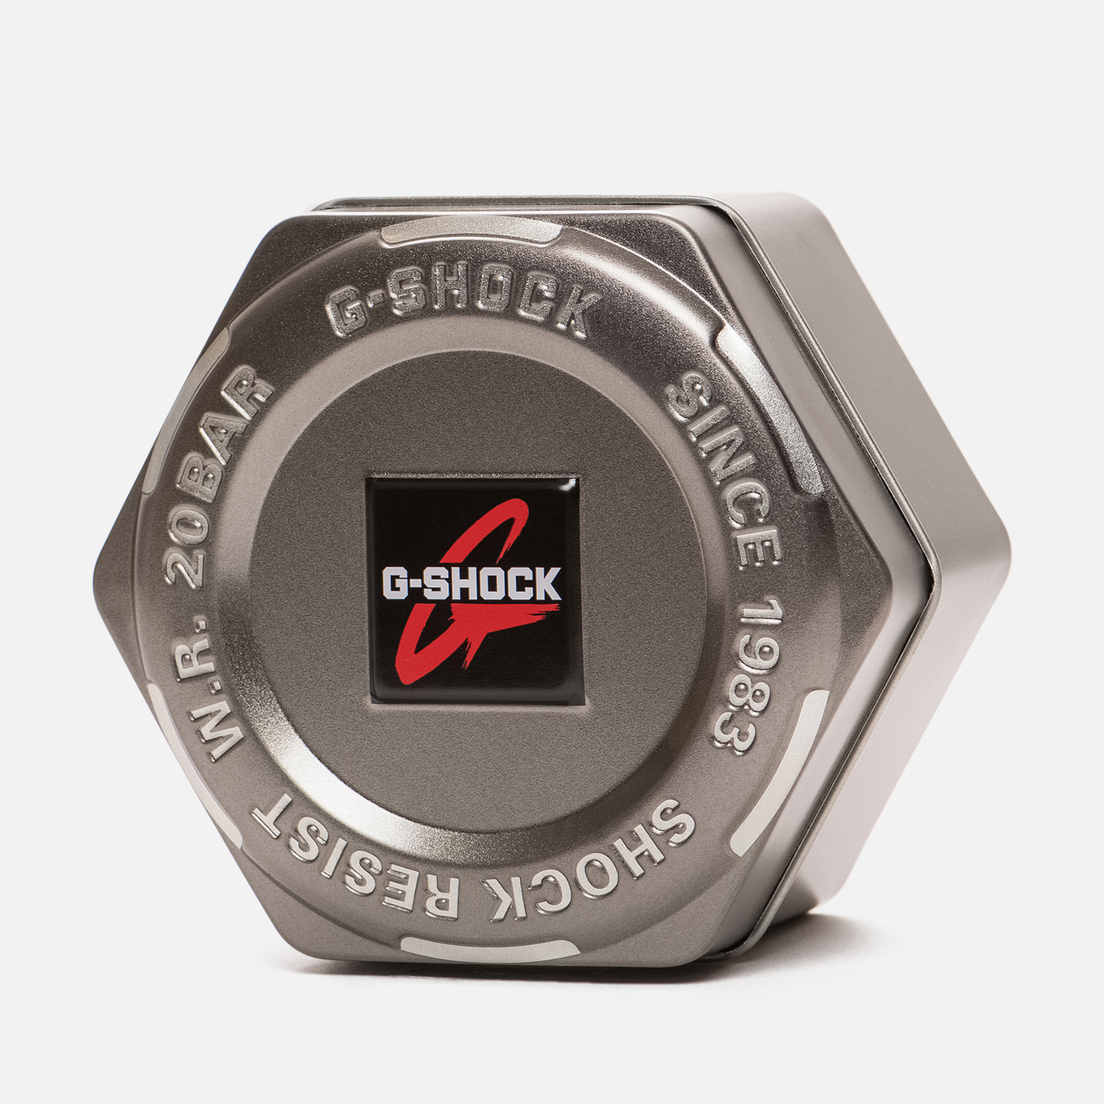 CASIO Наручные часы G-SHOCK GD-120BT-1E Black Leather Texture Series